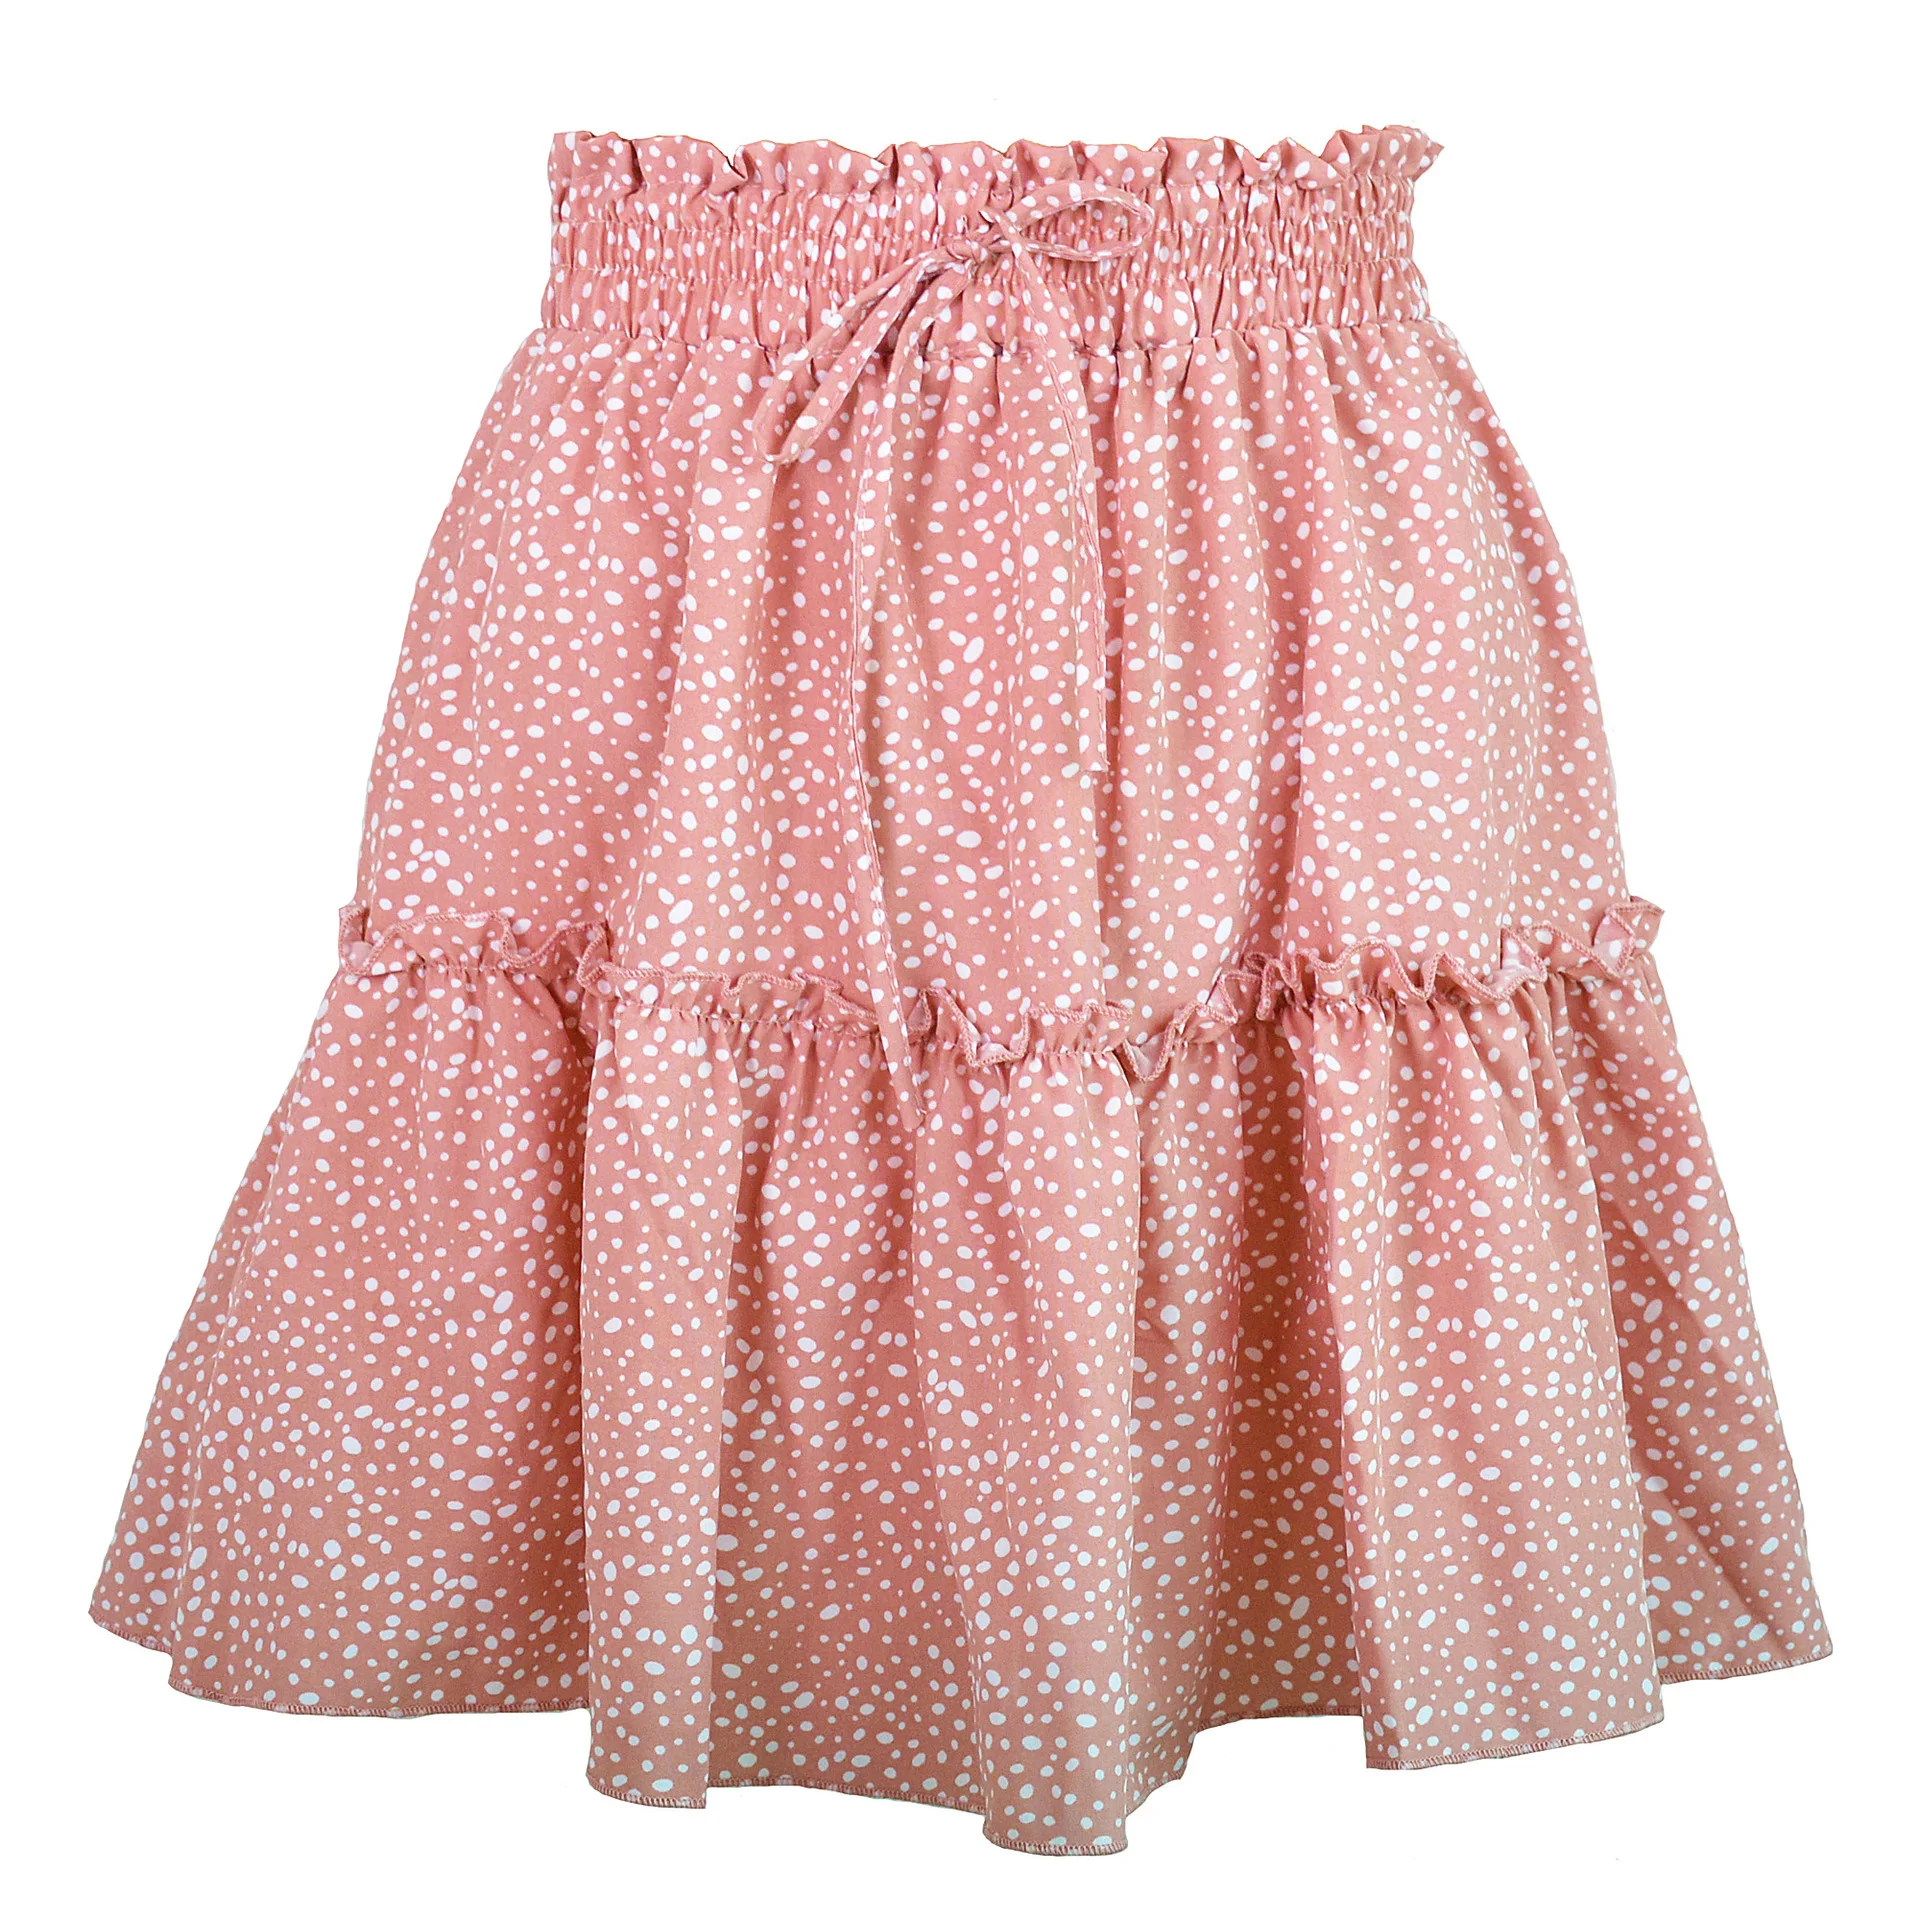 2023 Summer Casual High Waist Women Skirt Elastic Ruffle Floral Printing A-Line Pleated Skirt